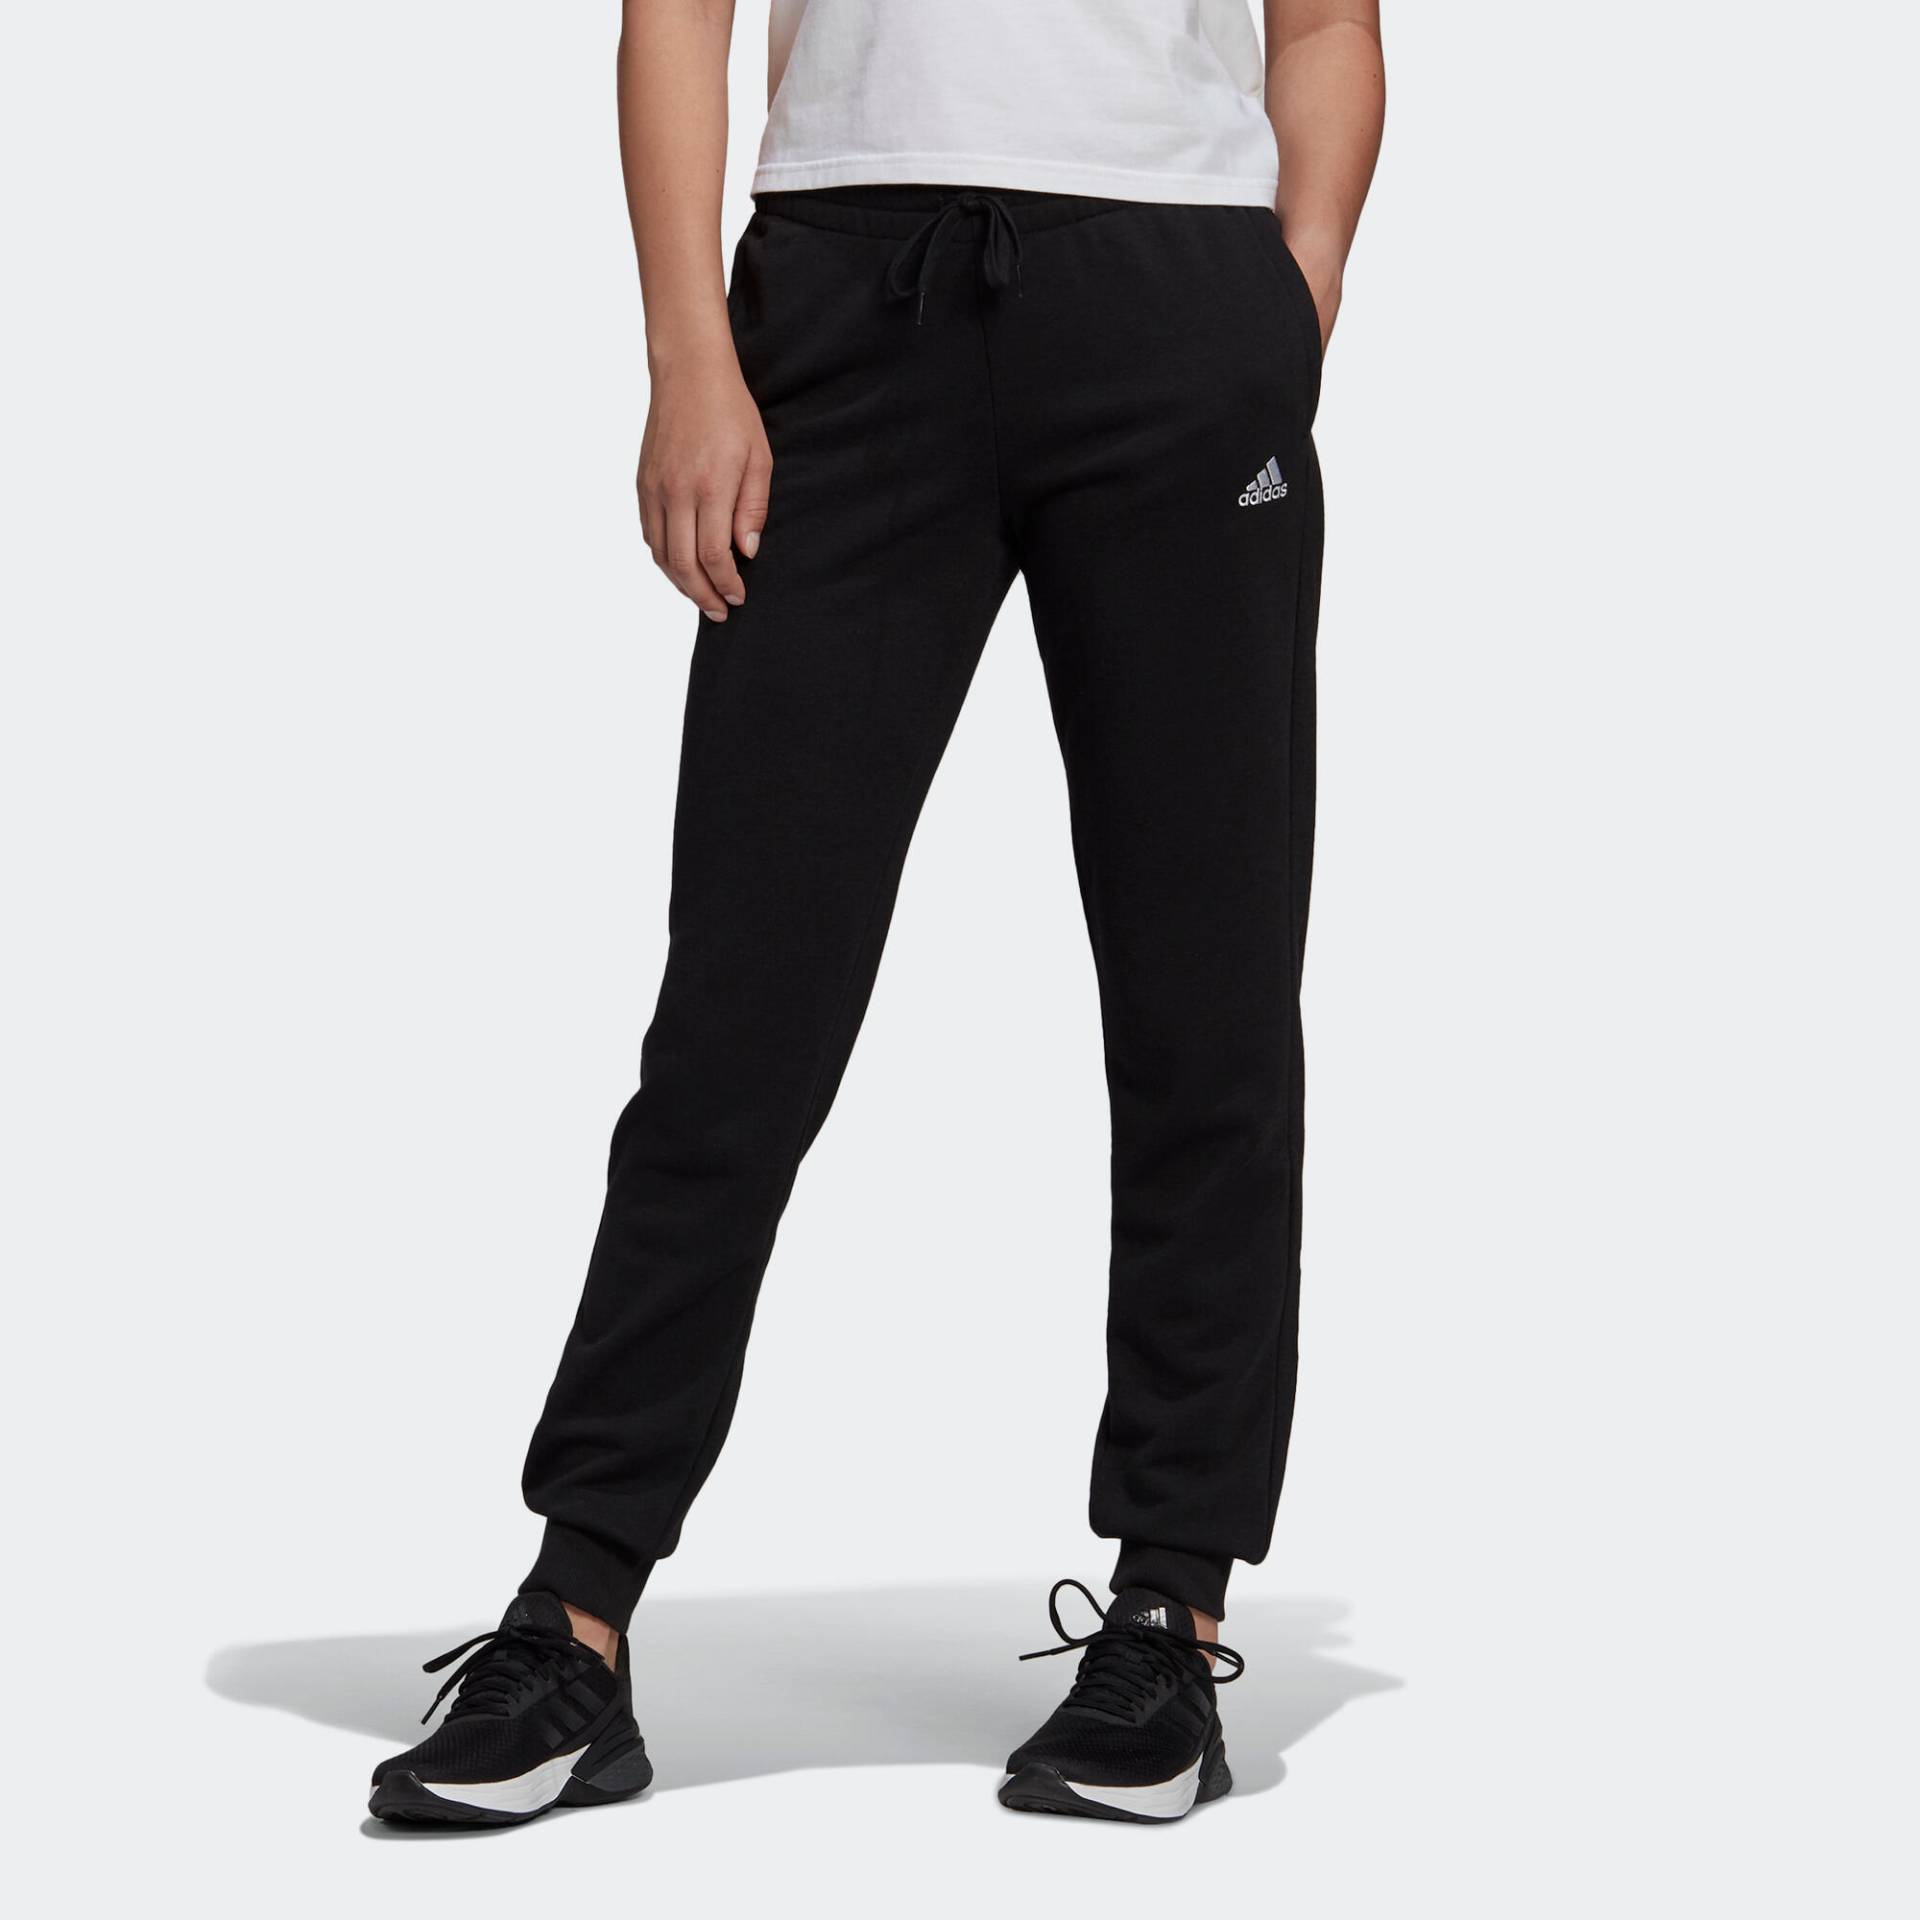 Adidas Jogginghose Damen Slim Linear - schwarz von Adidas